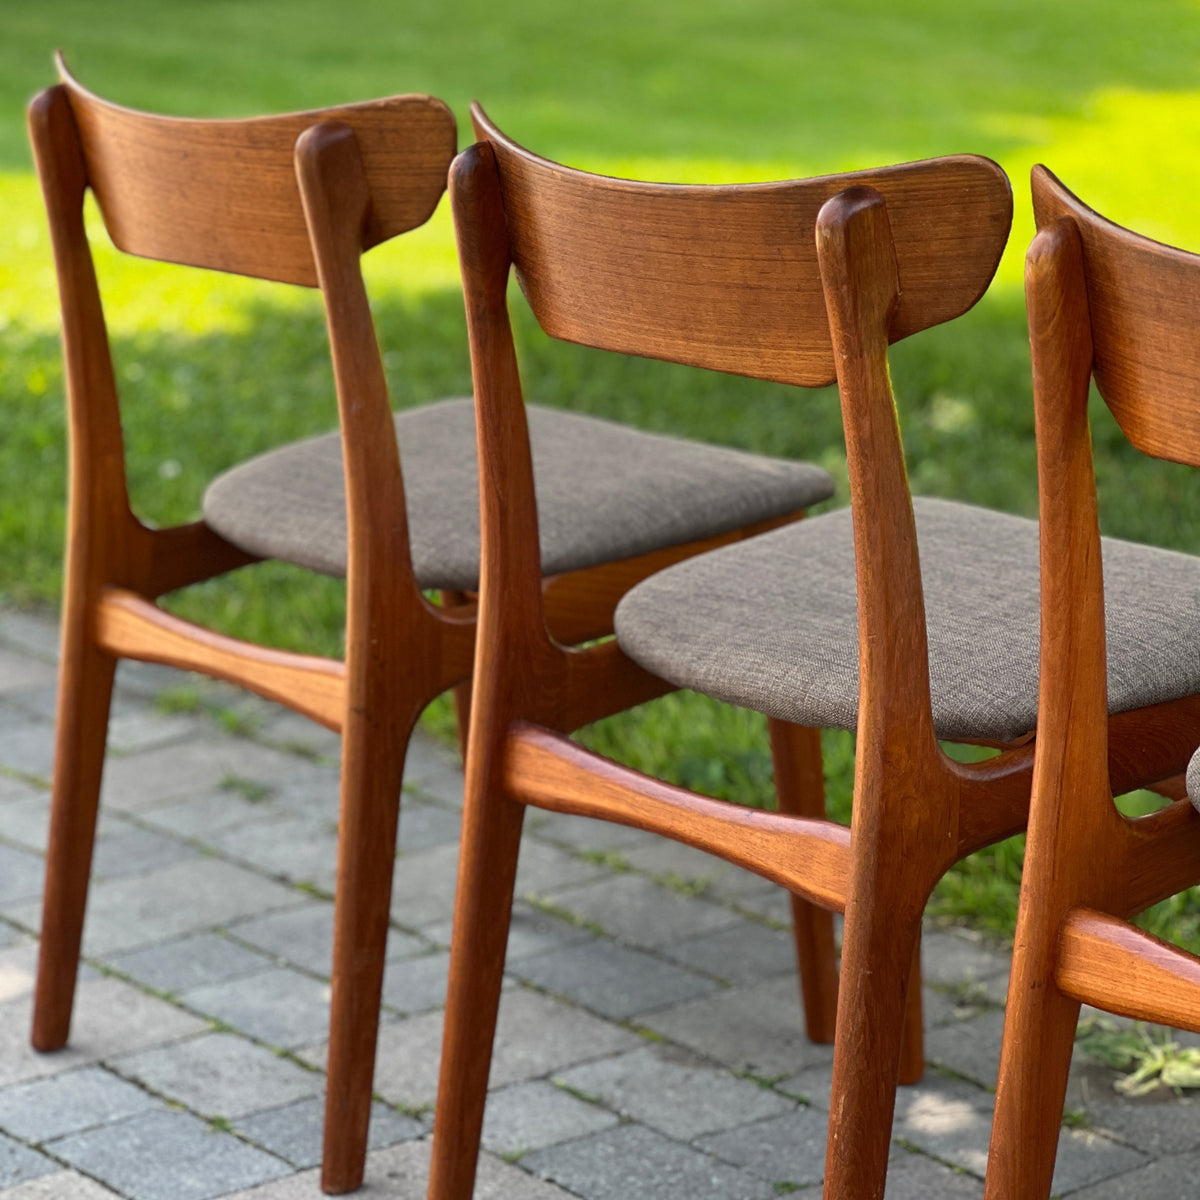 Schiønning &amp; Elgaard Teak Chairs